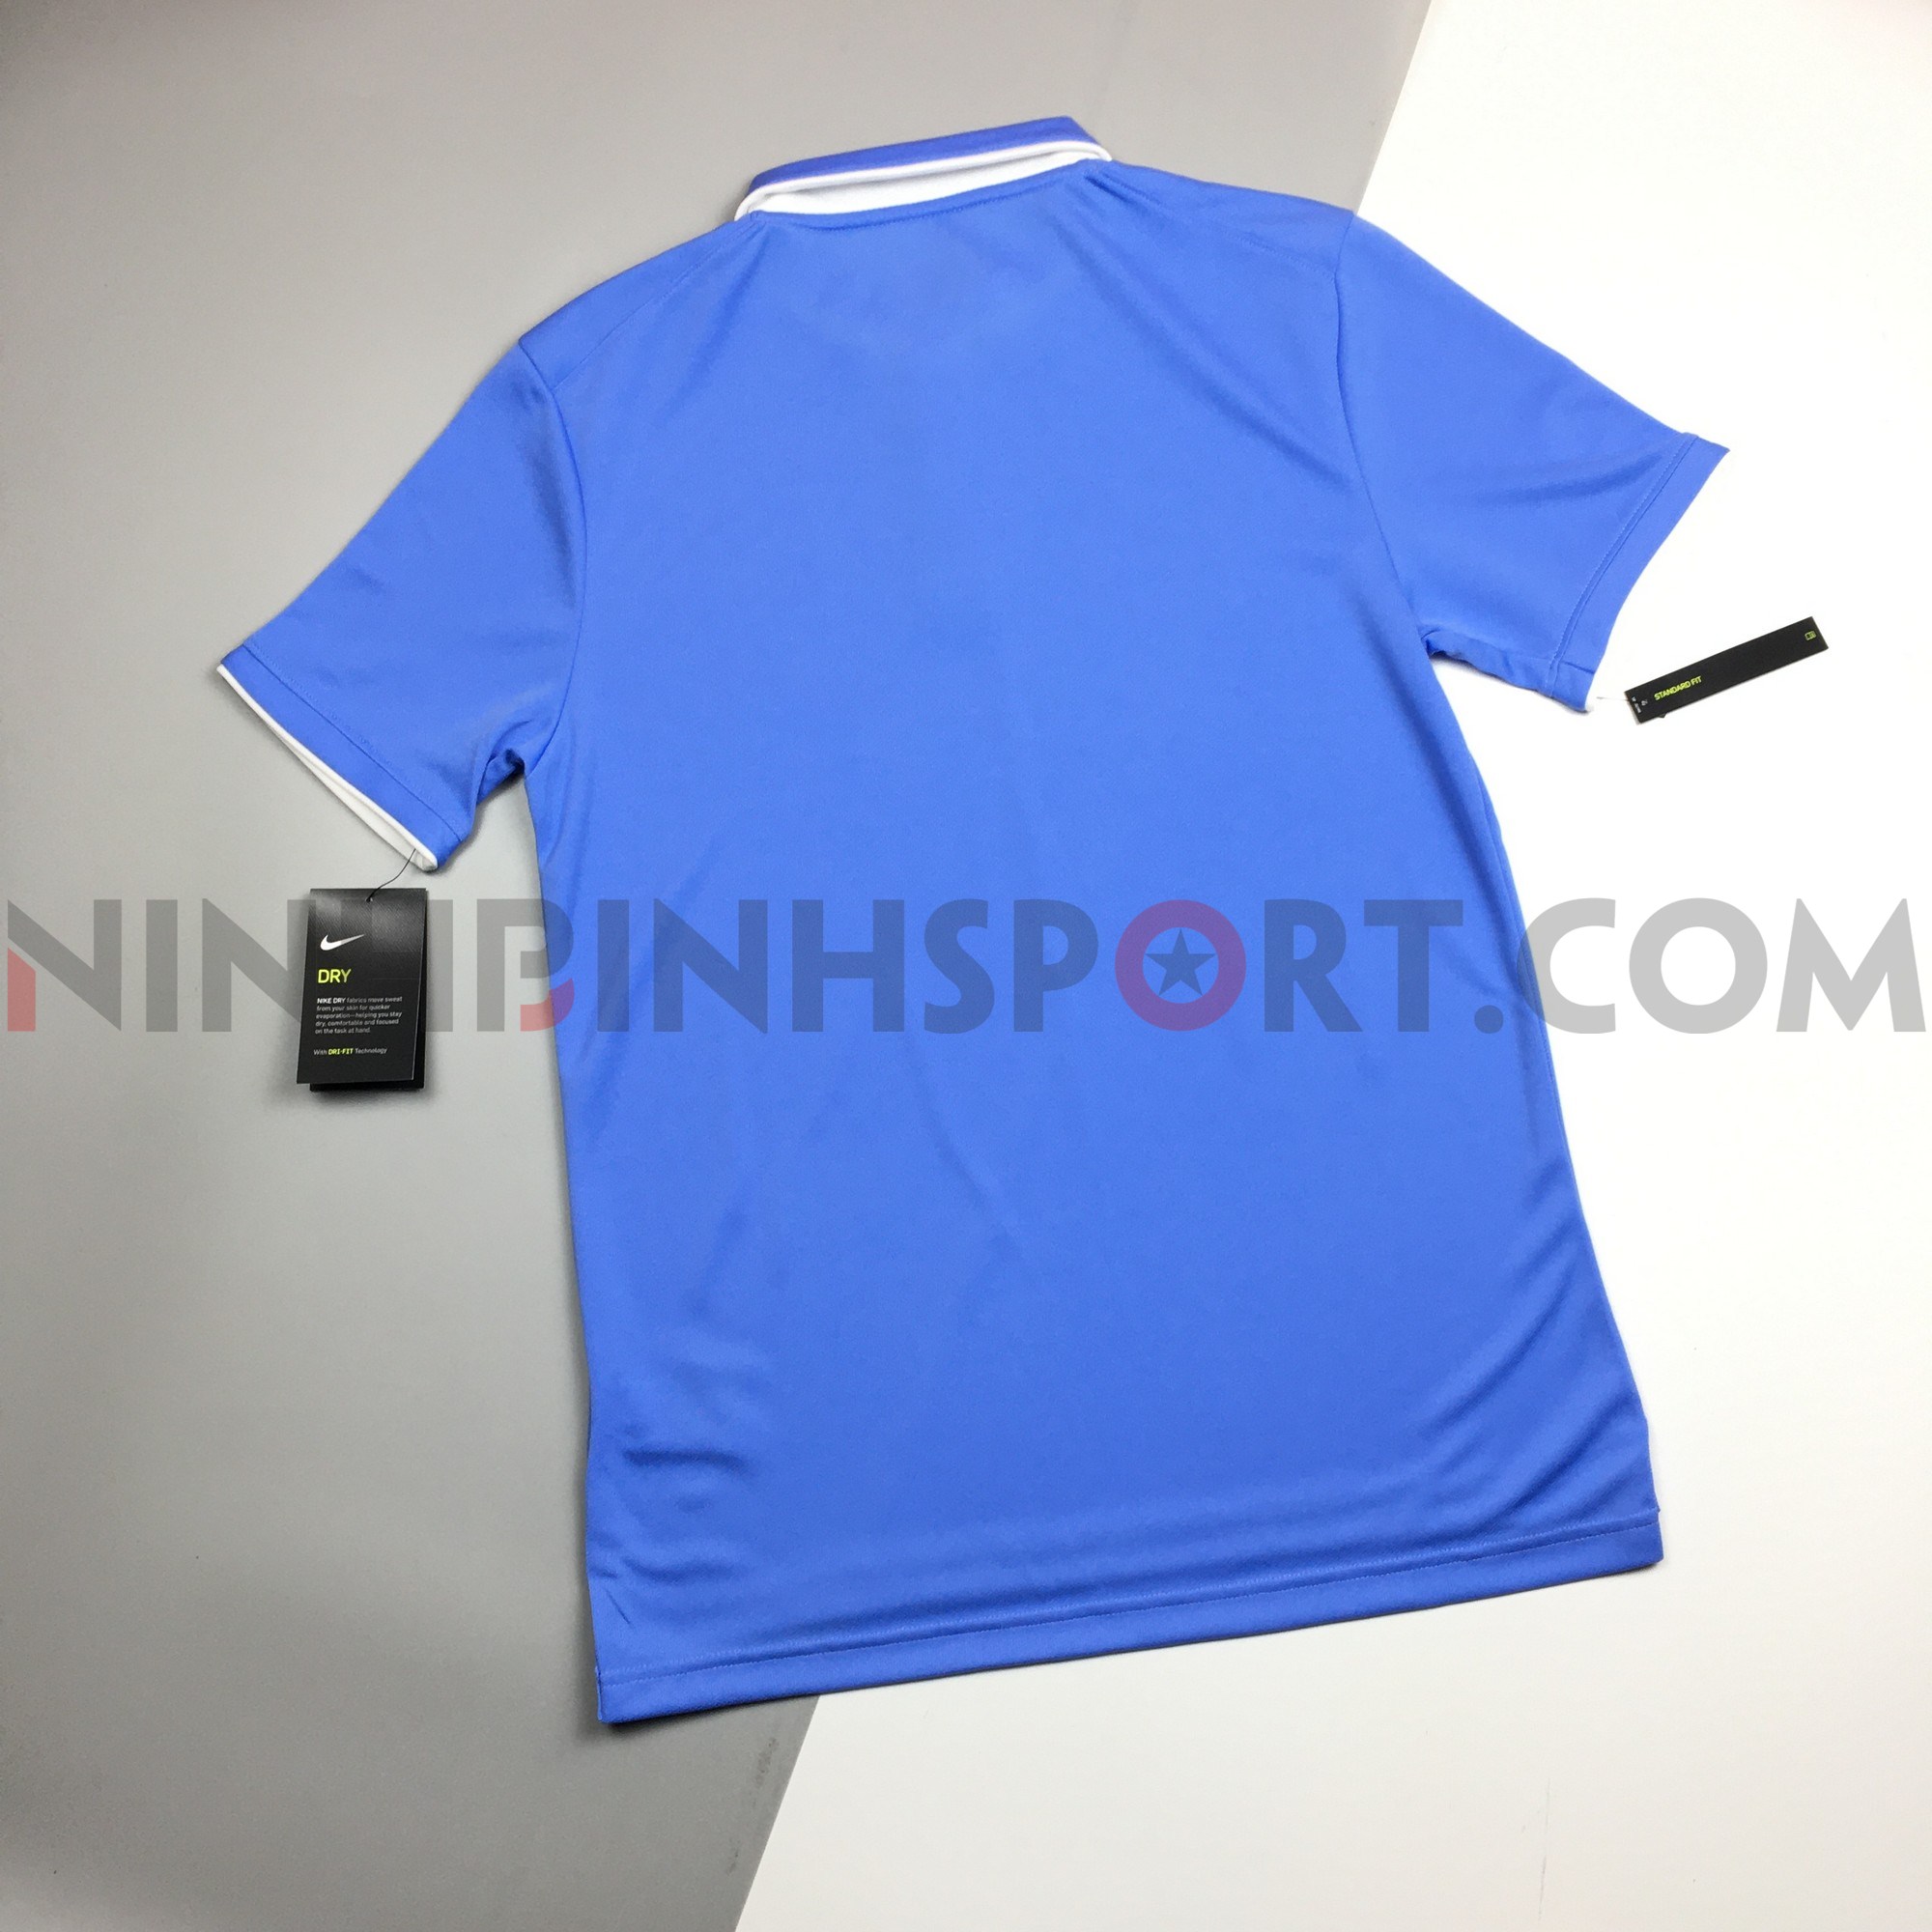 Áo thể thao nam Nike Tennis Dri-fit Polo 939138-478